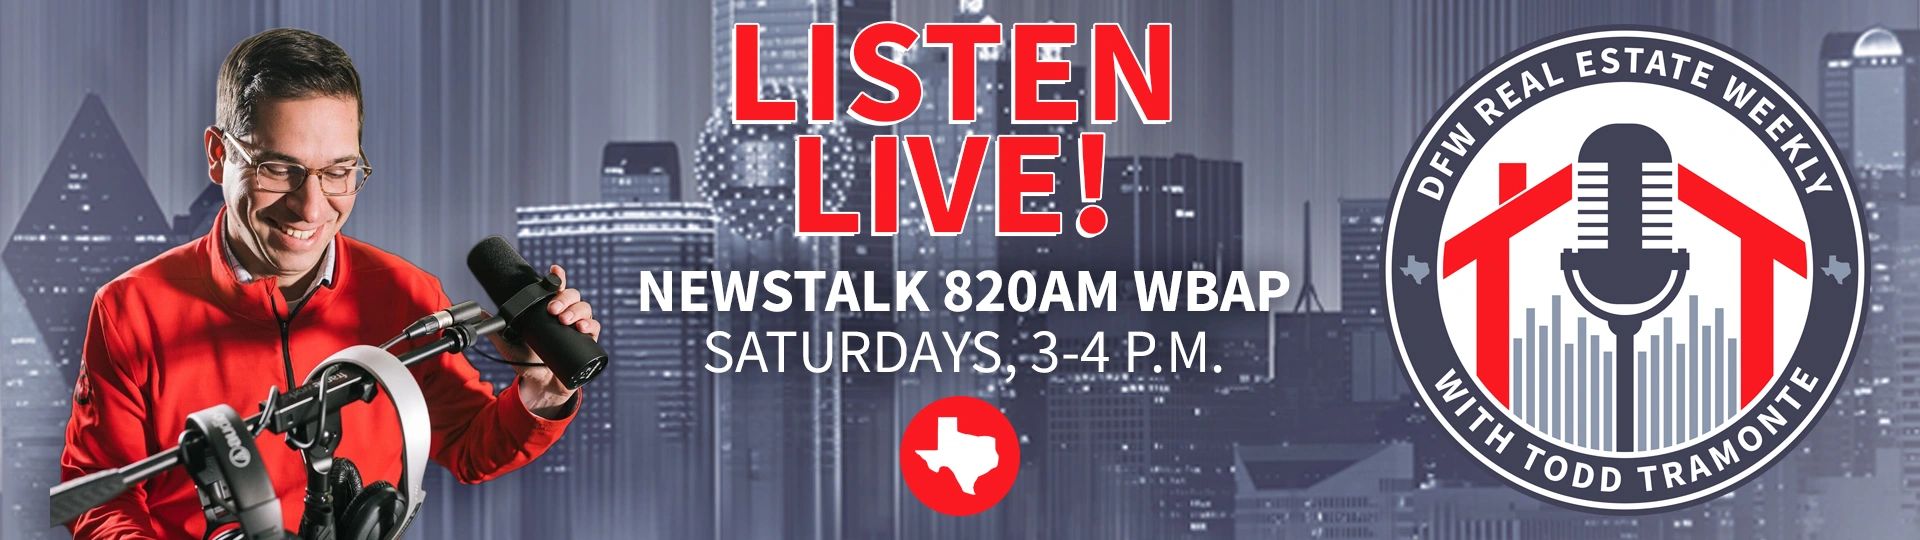 Dallas -Fort Worth Real Estate Weekly airs on DFW's #1 talk radio station 820AM WBAP Saturdays 3-4pm